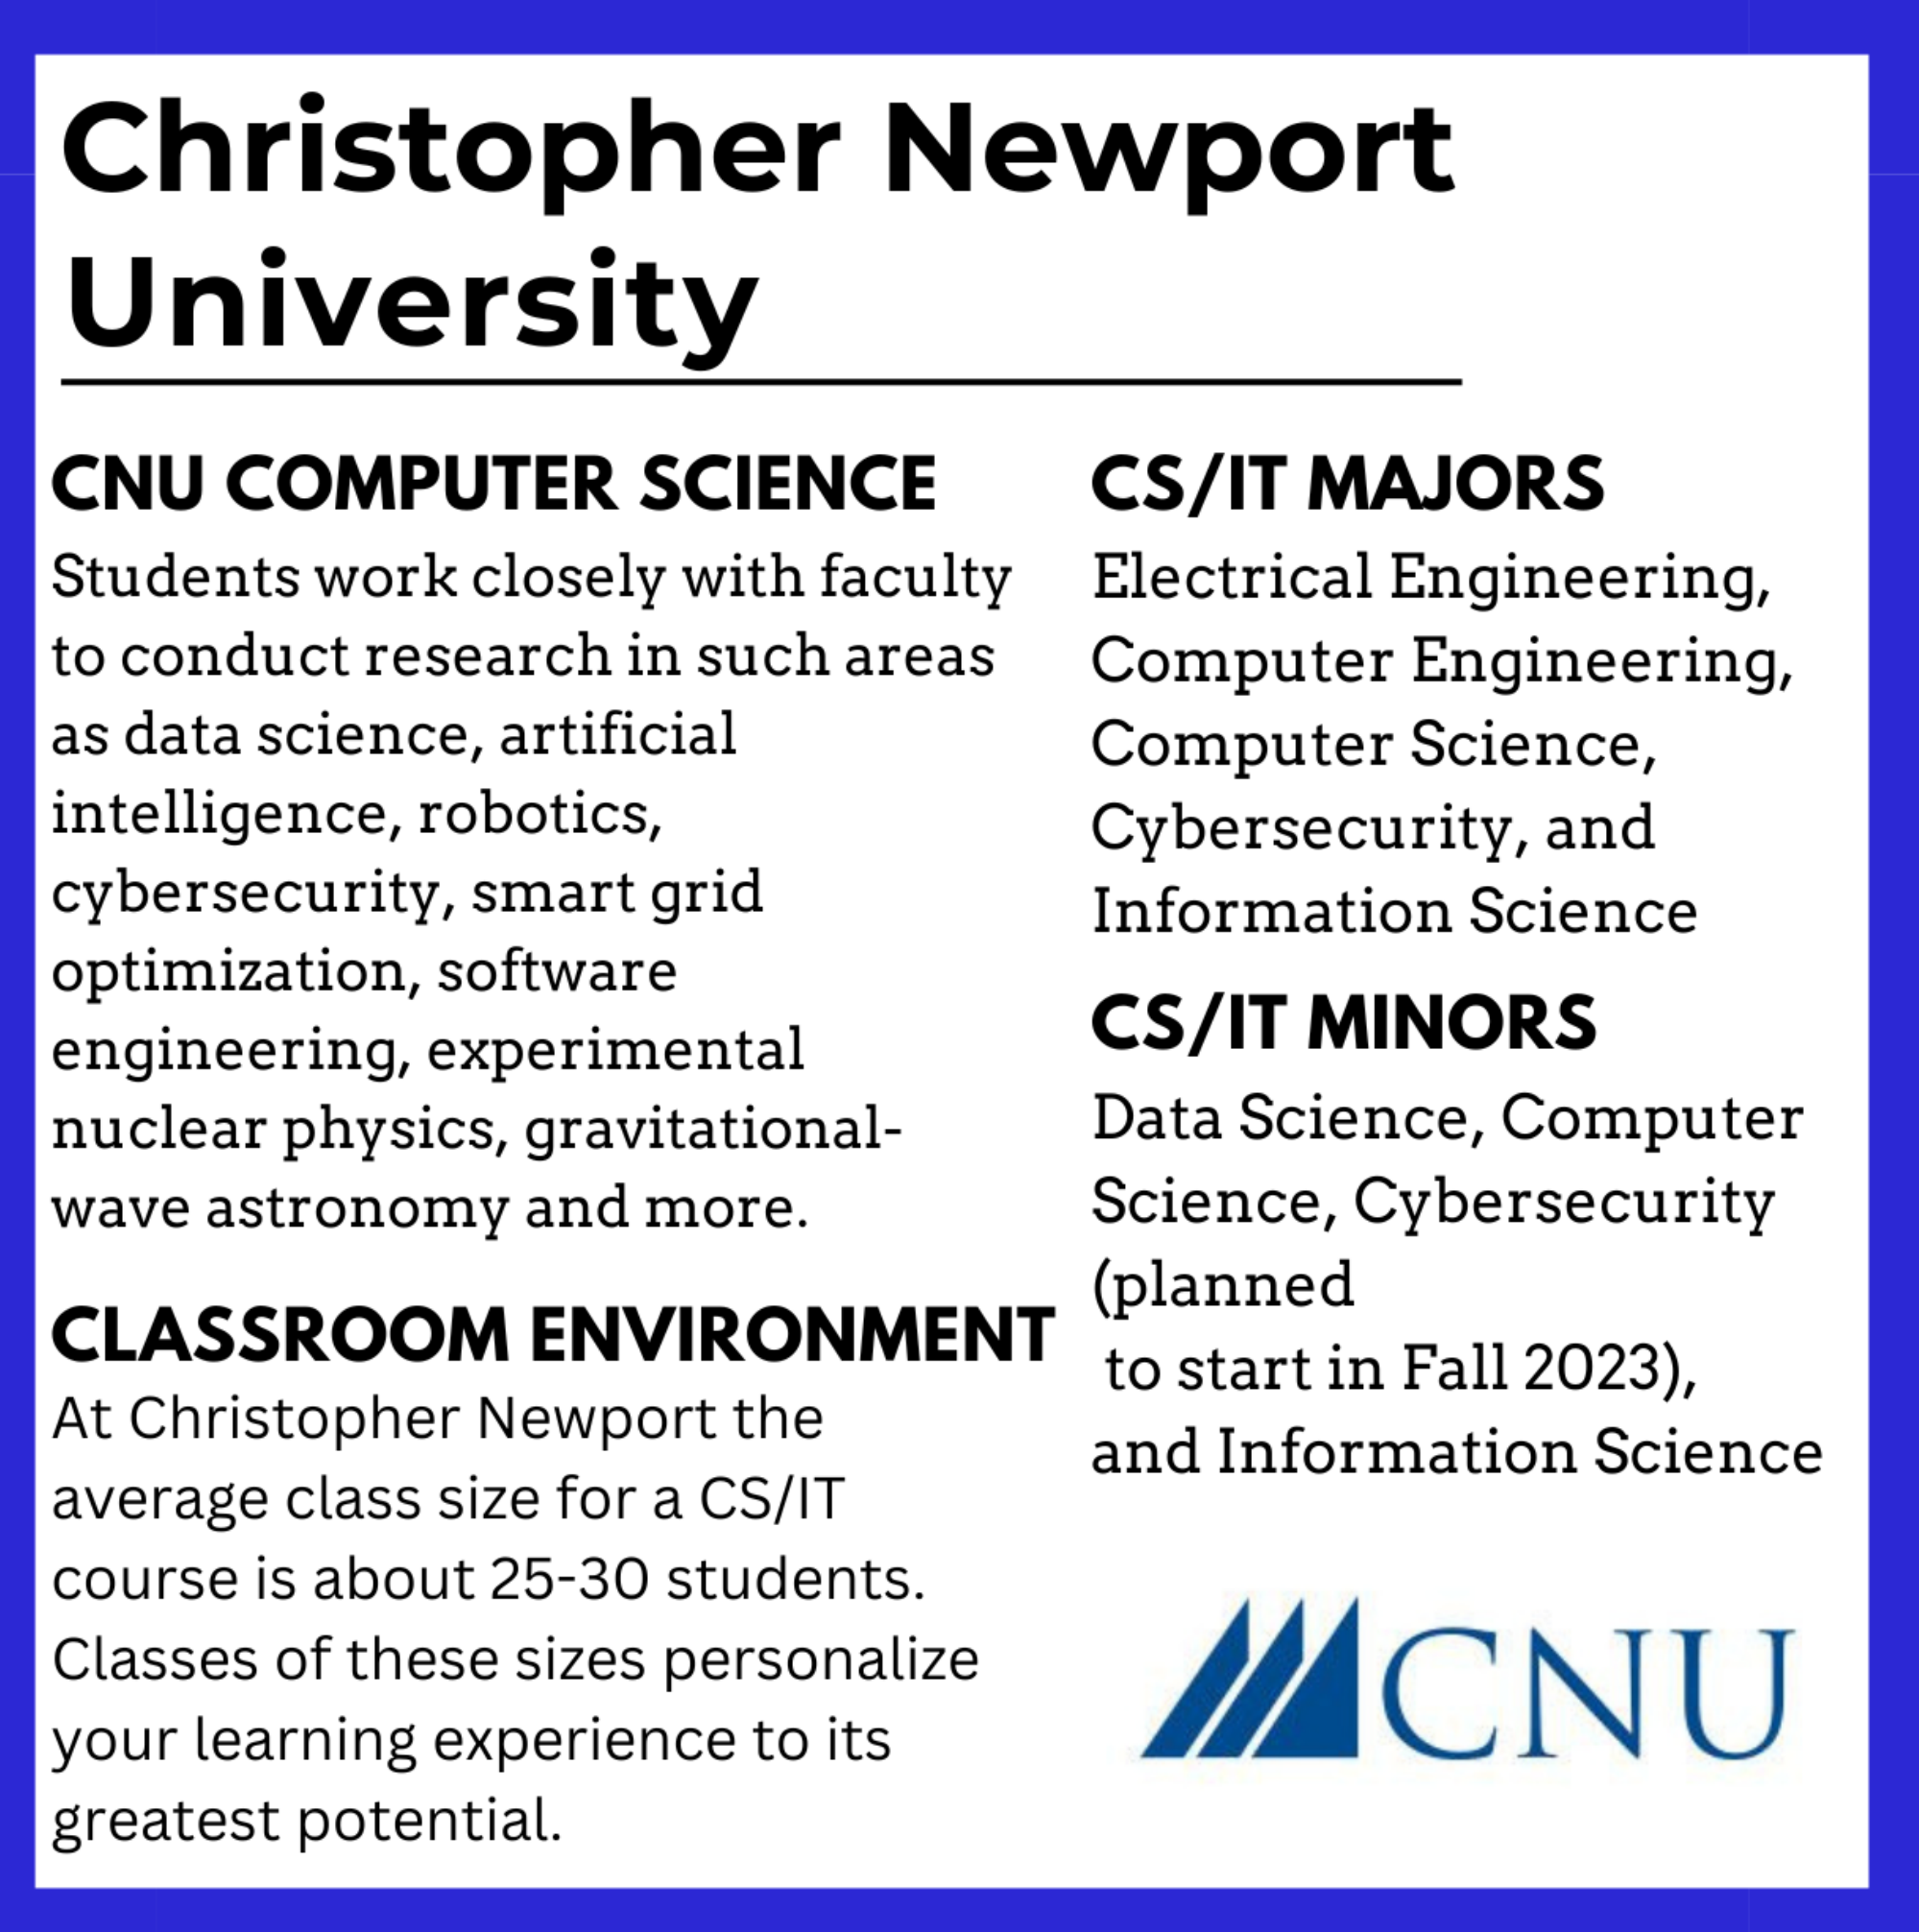 Christopher Newport University info